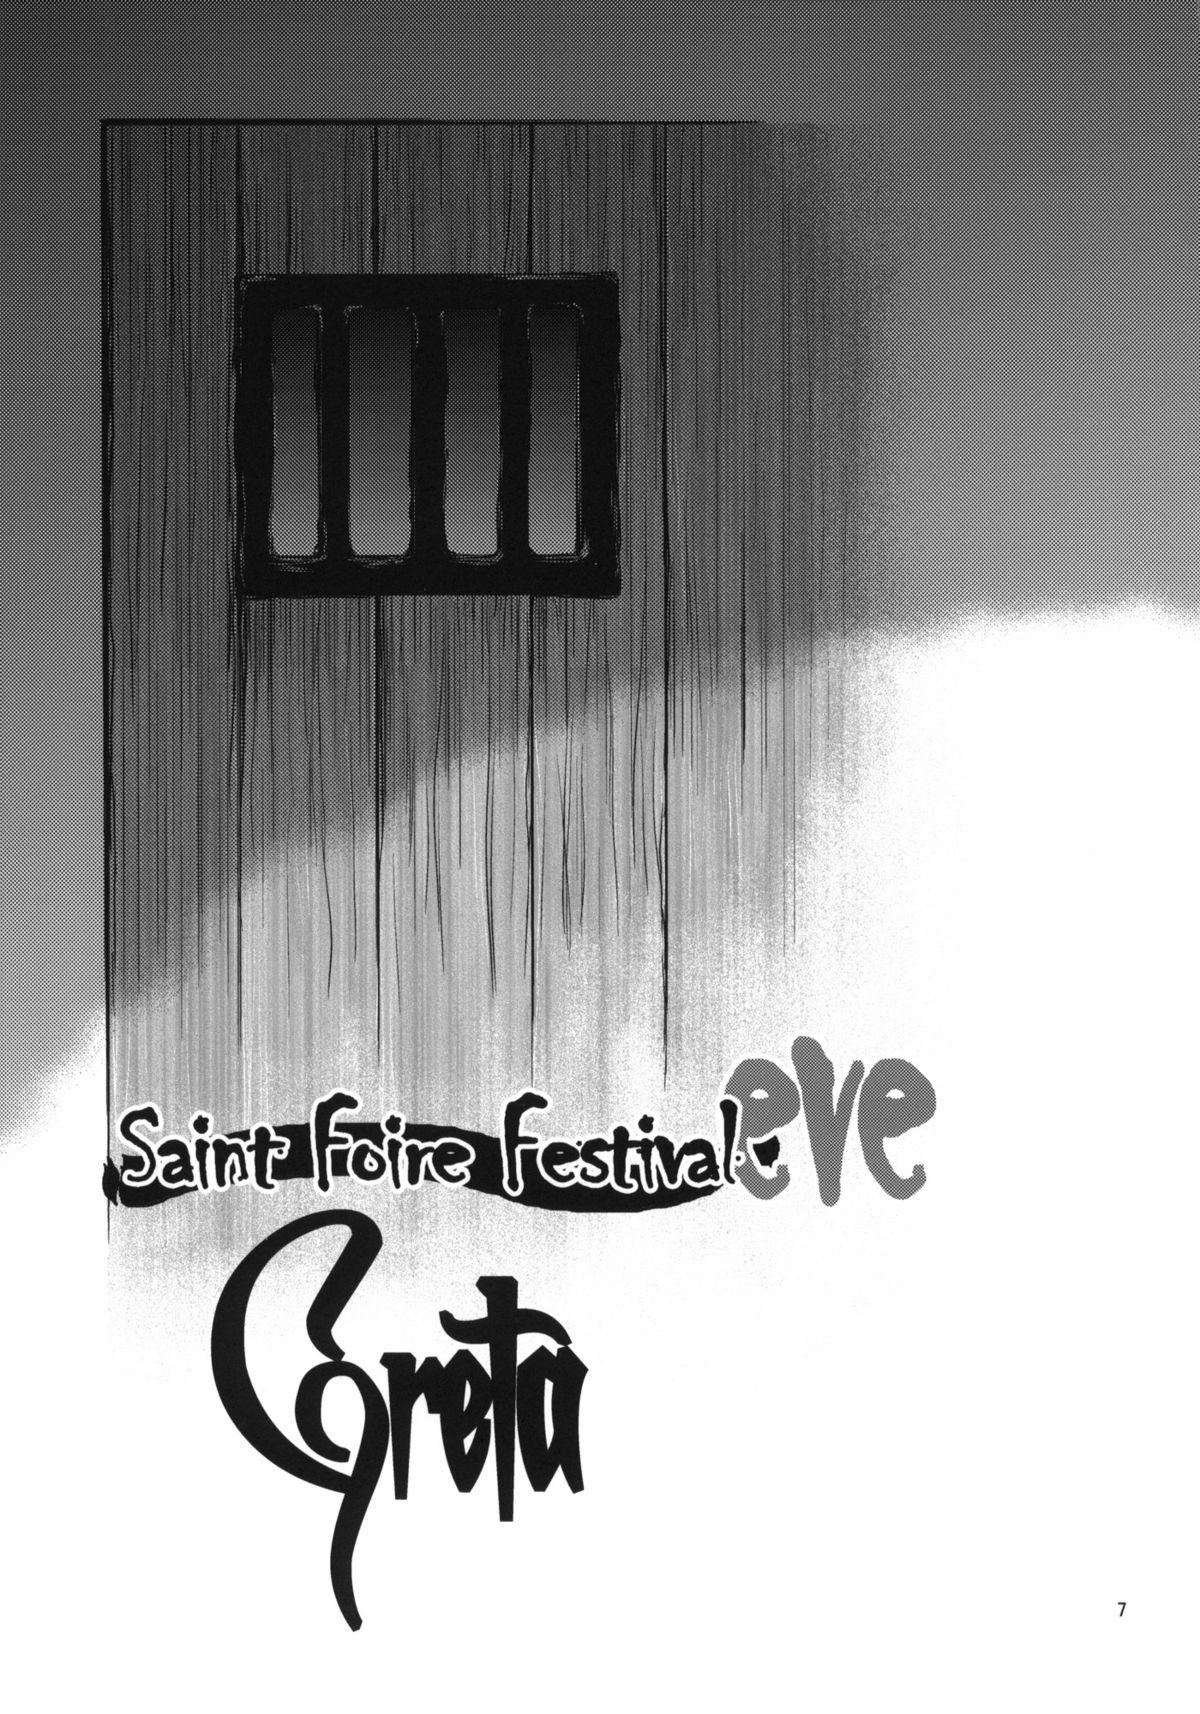 Saint Foire Festival eve Greta 5